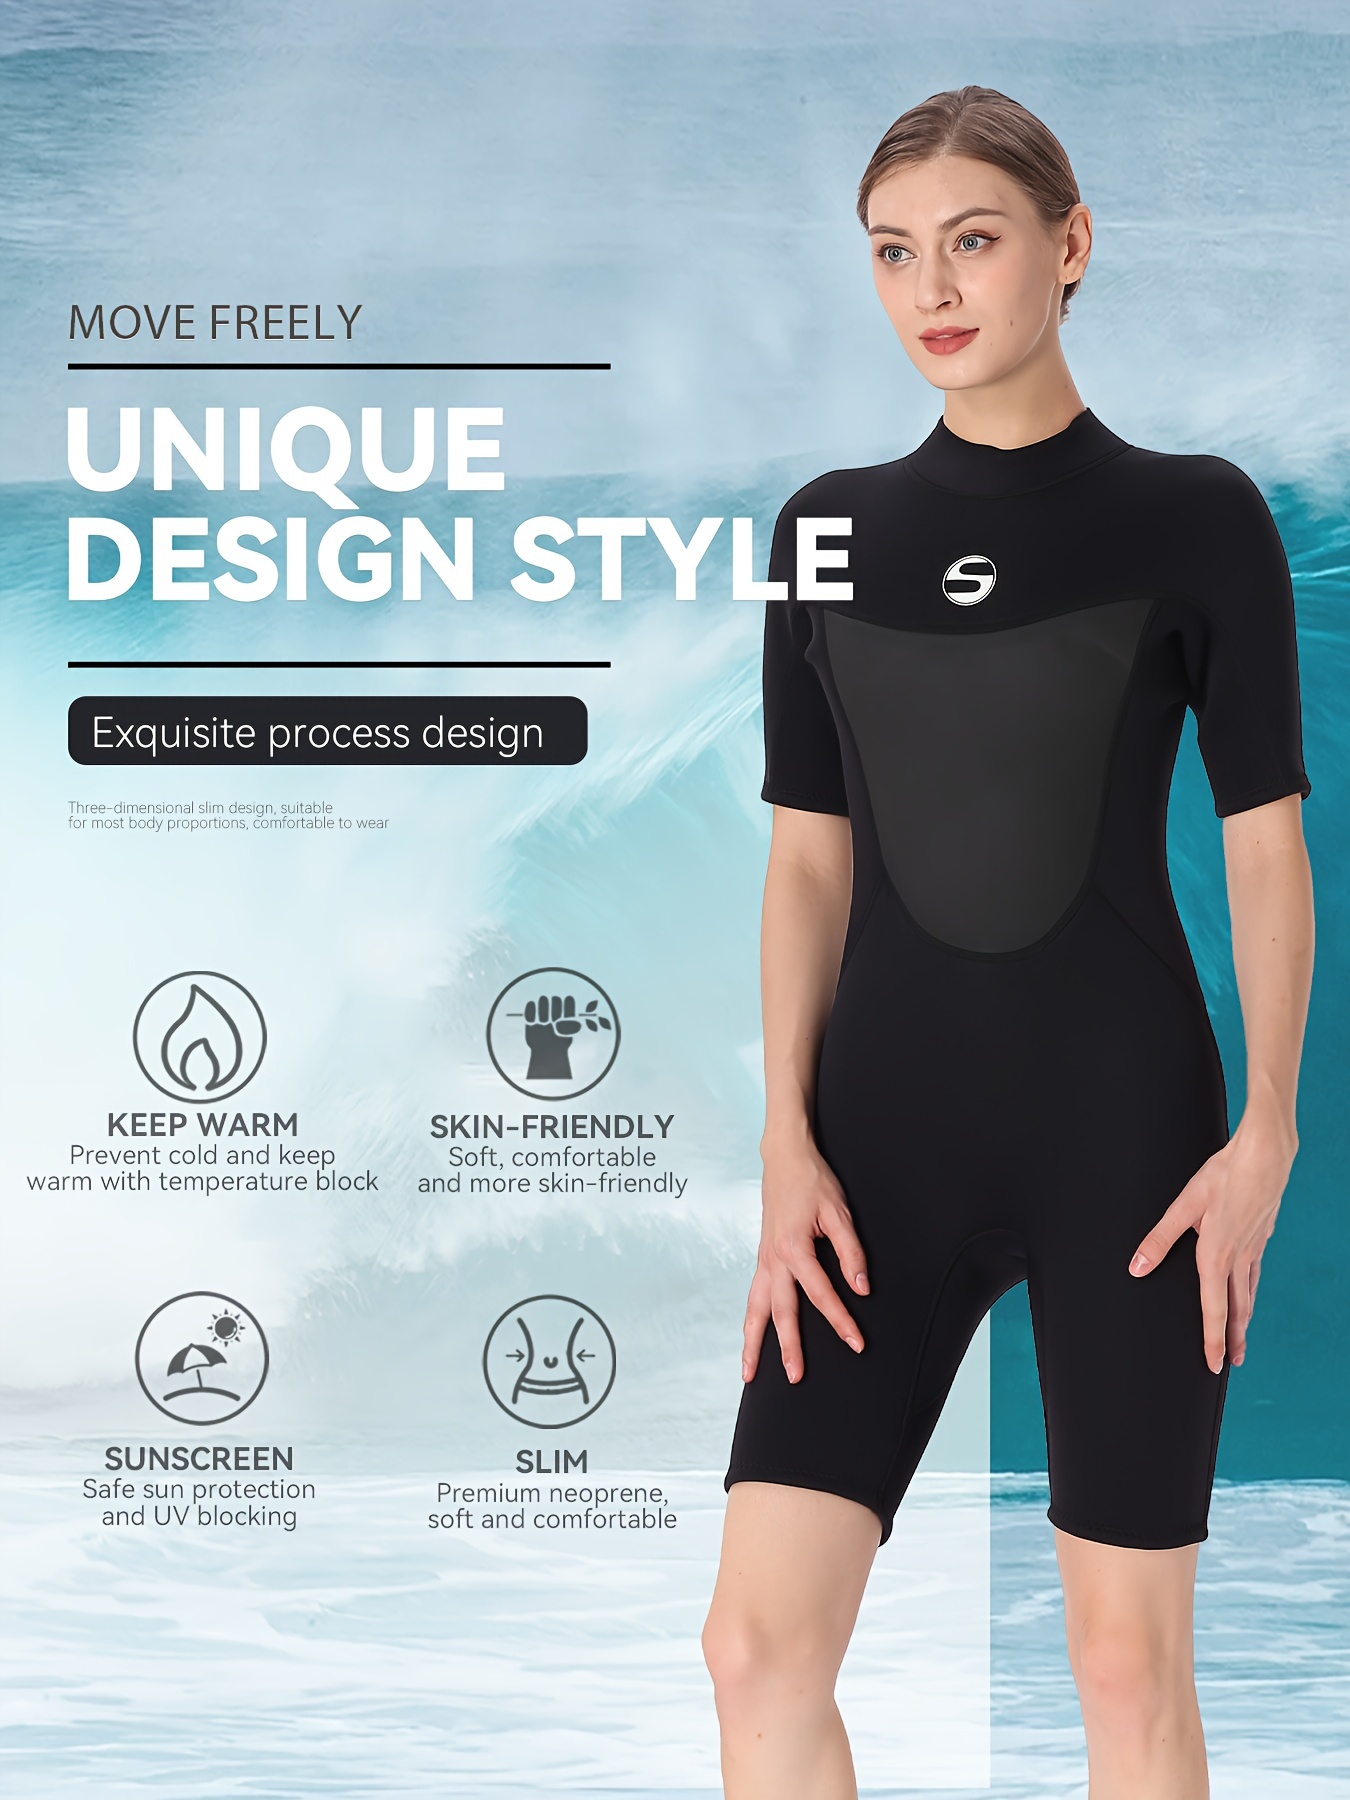 One Piece Full Body Diving Wetsuit Hooded Women Swimwear Surfing Suit  Swimsuit